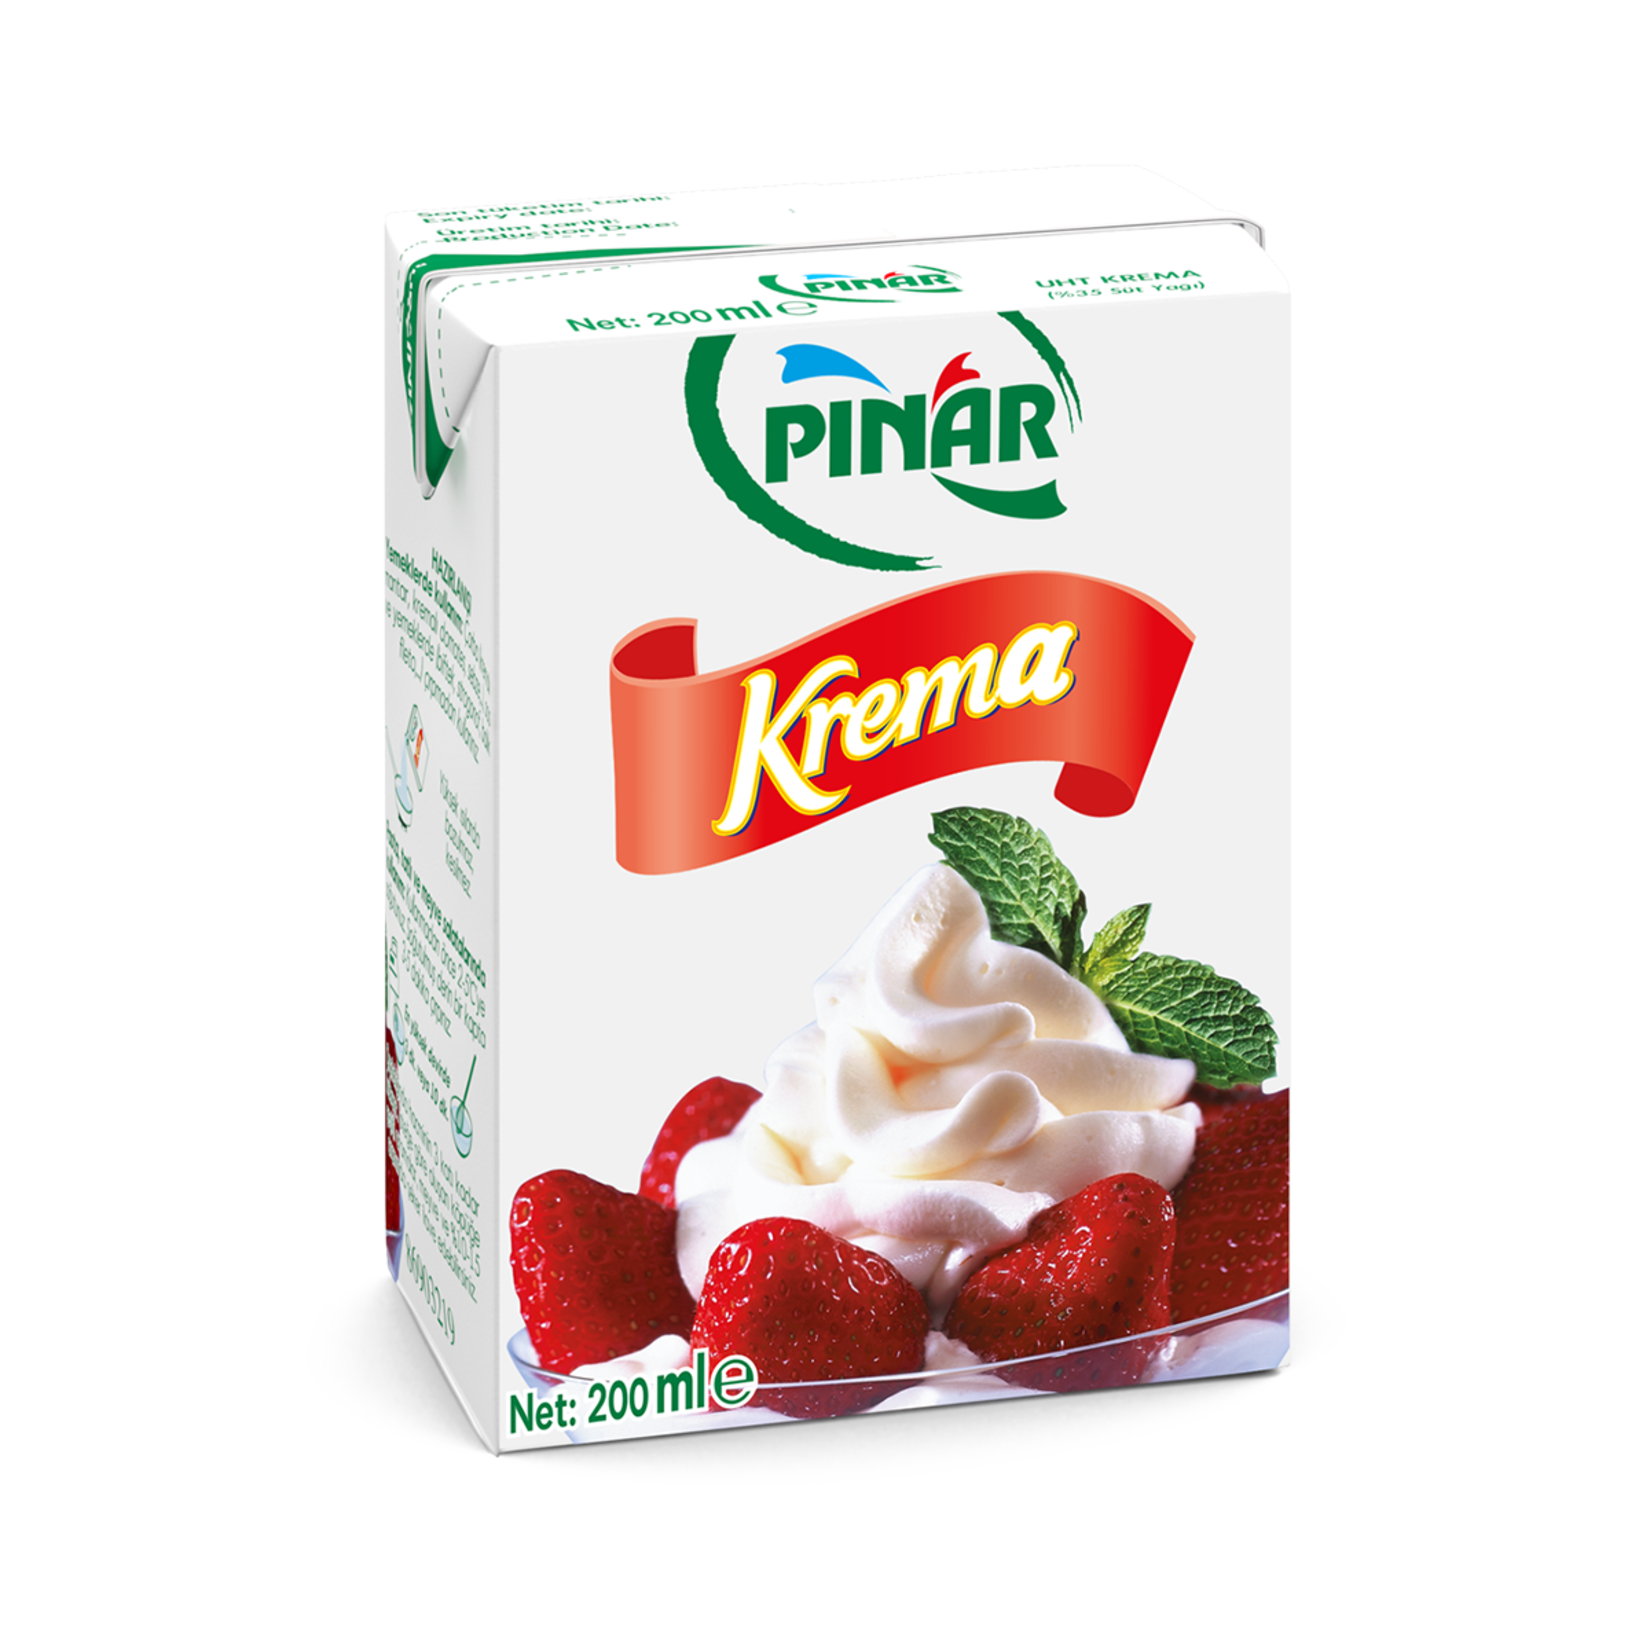 Pınar Krema